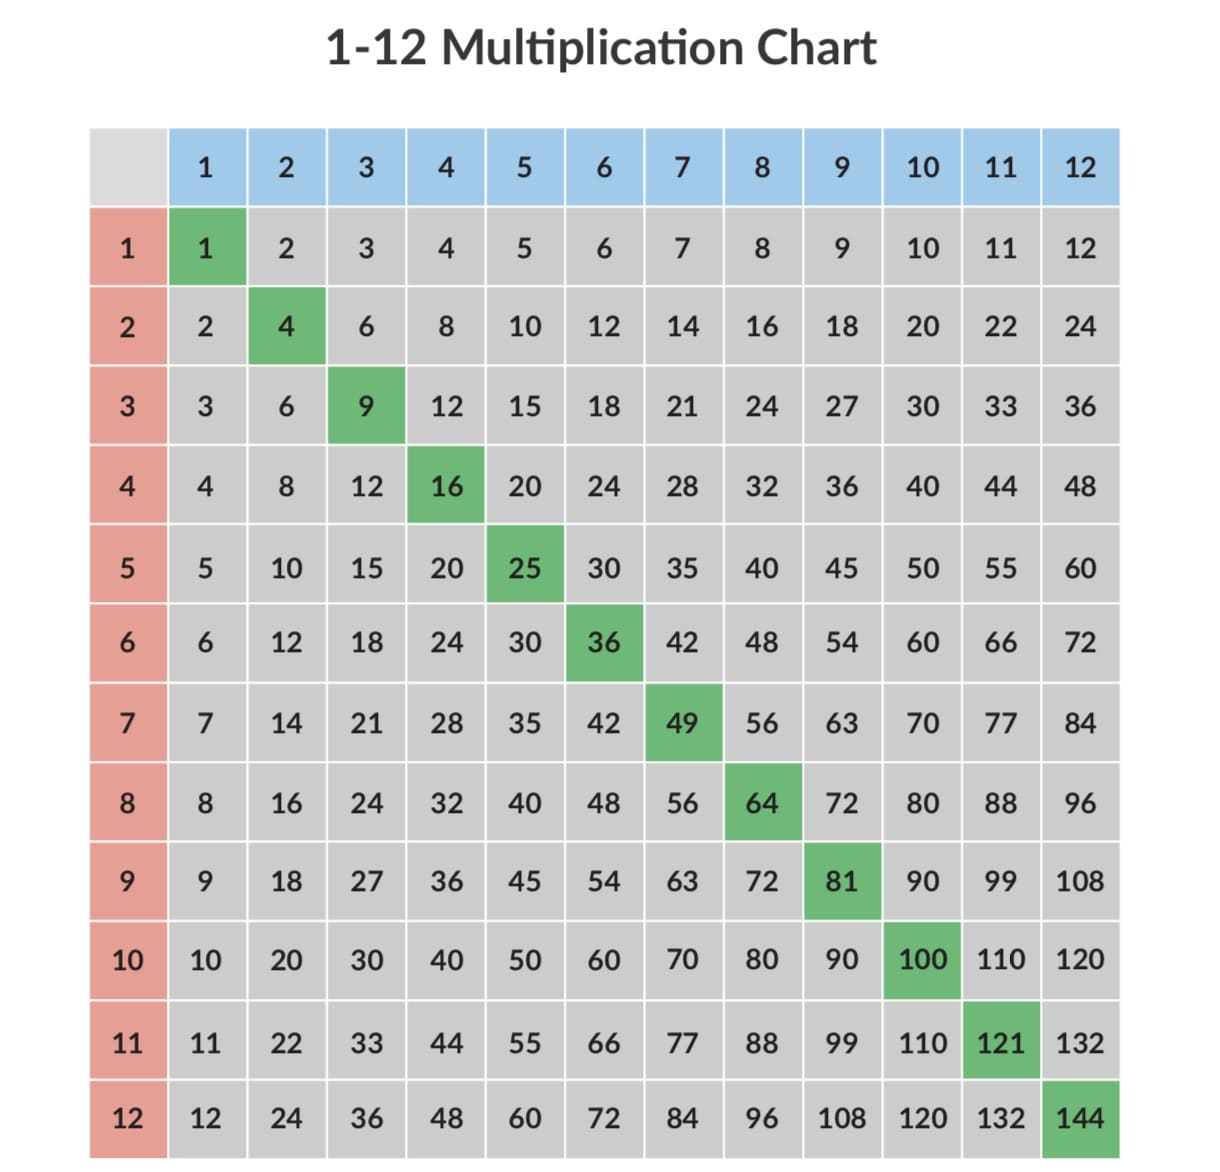 printable-multiplication-facts-chart-printablemultiplication